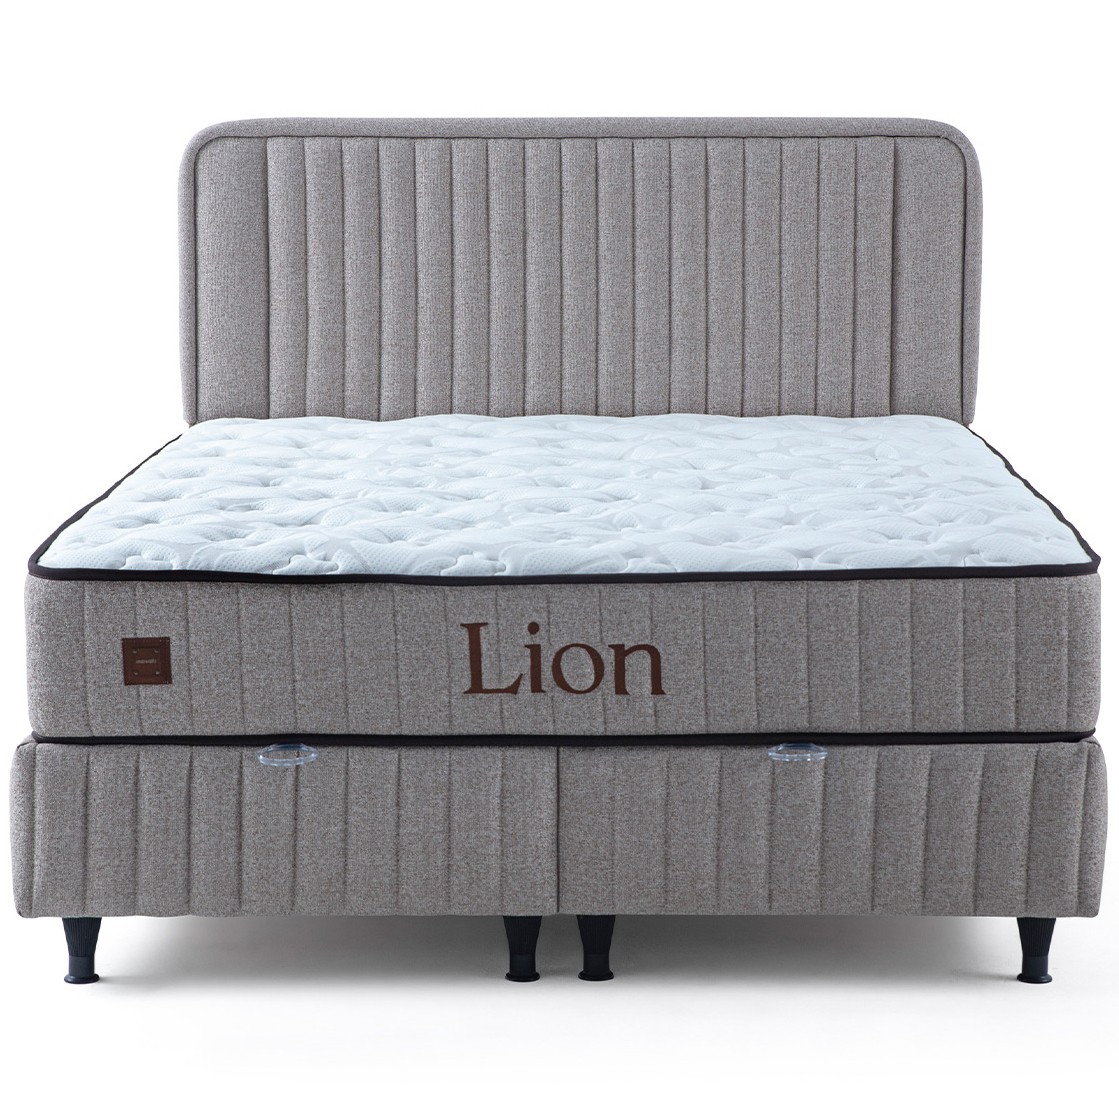 Lion Mattress 90x190cm